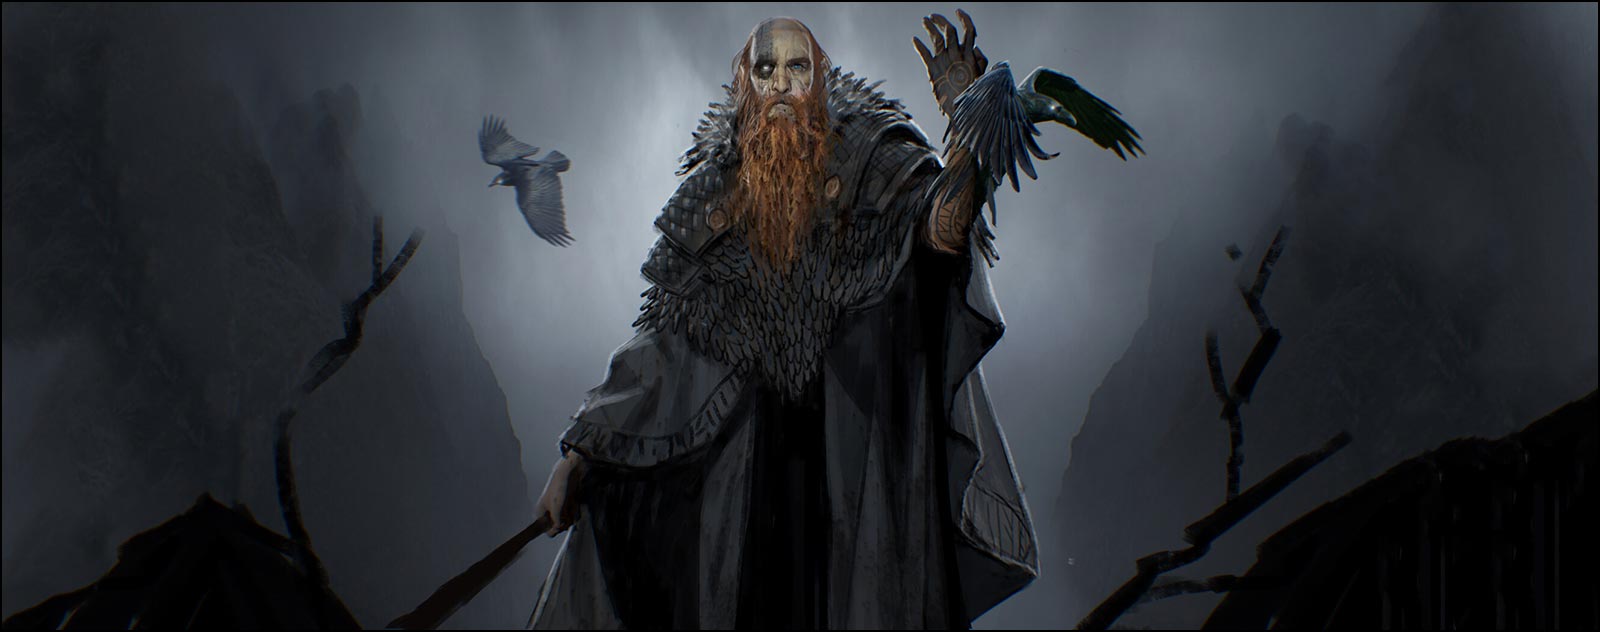 Odin mythologie nordique